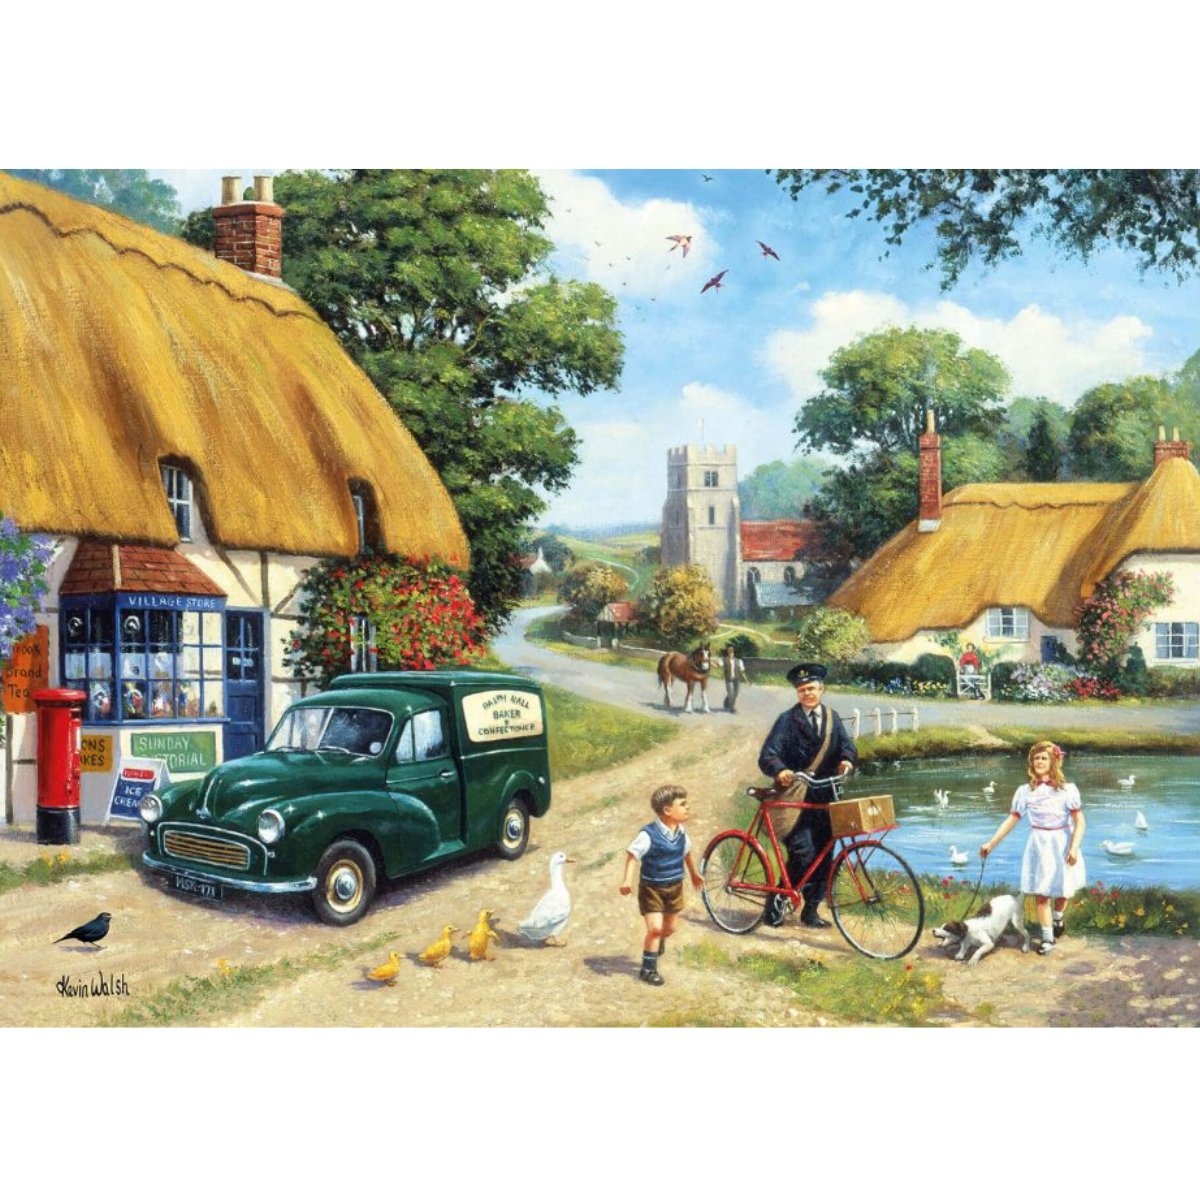 Kevin Walsh Nostalgia Village Postman Jigsaw Puzzle (1000 Pieces)